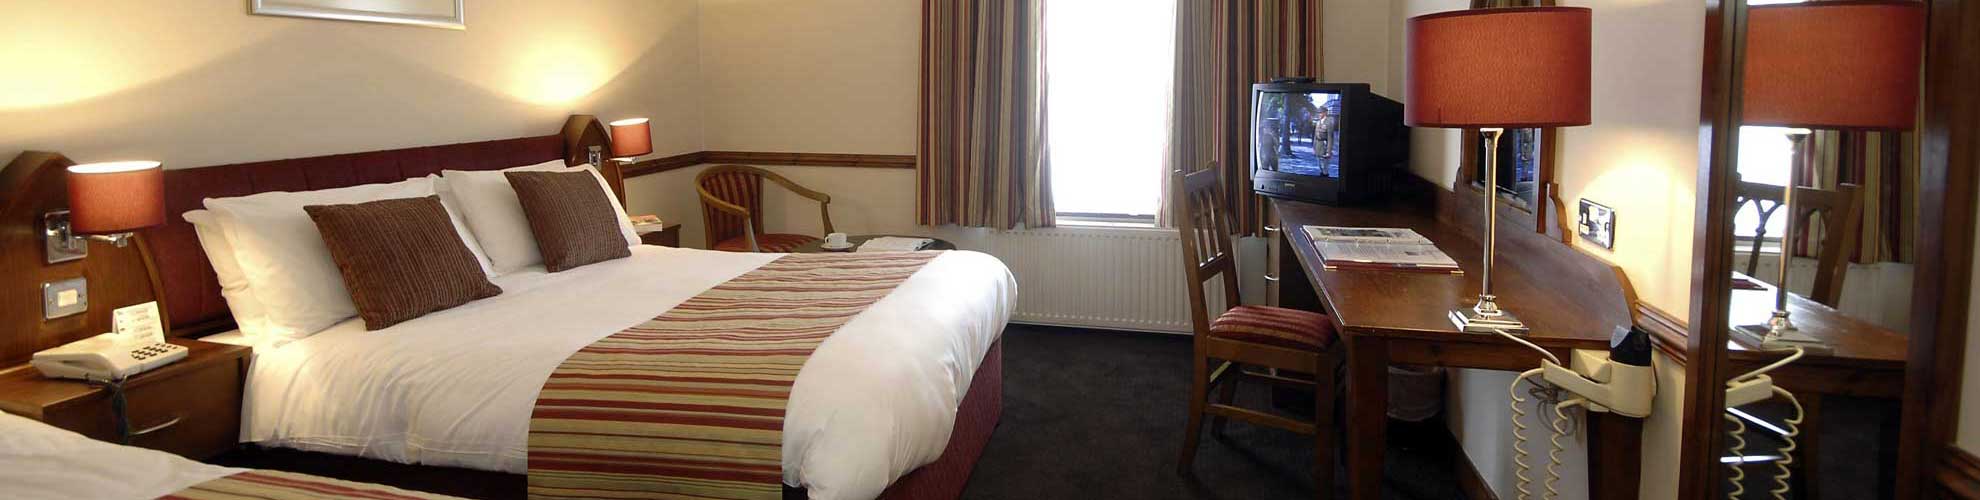 Killarney Court Hotel - Hotel Bedroom